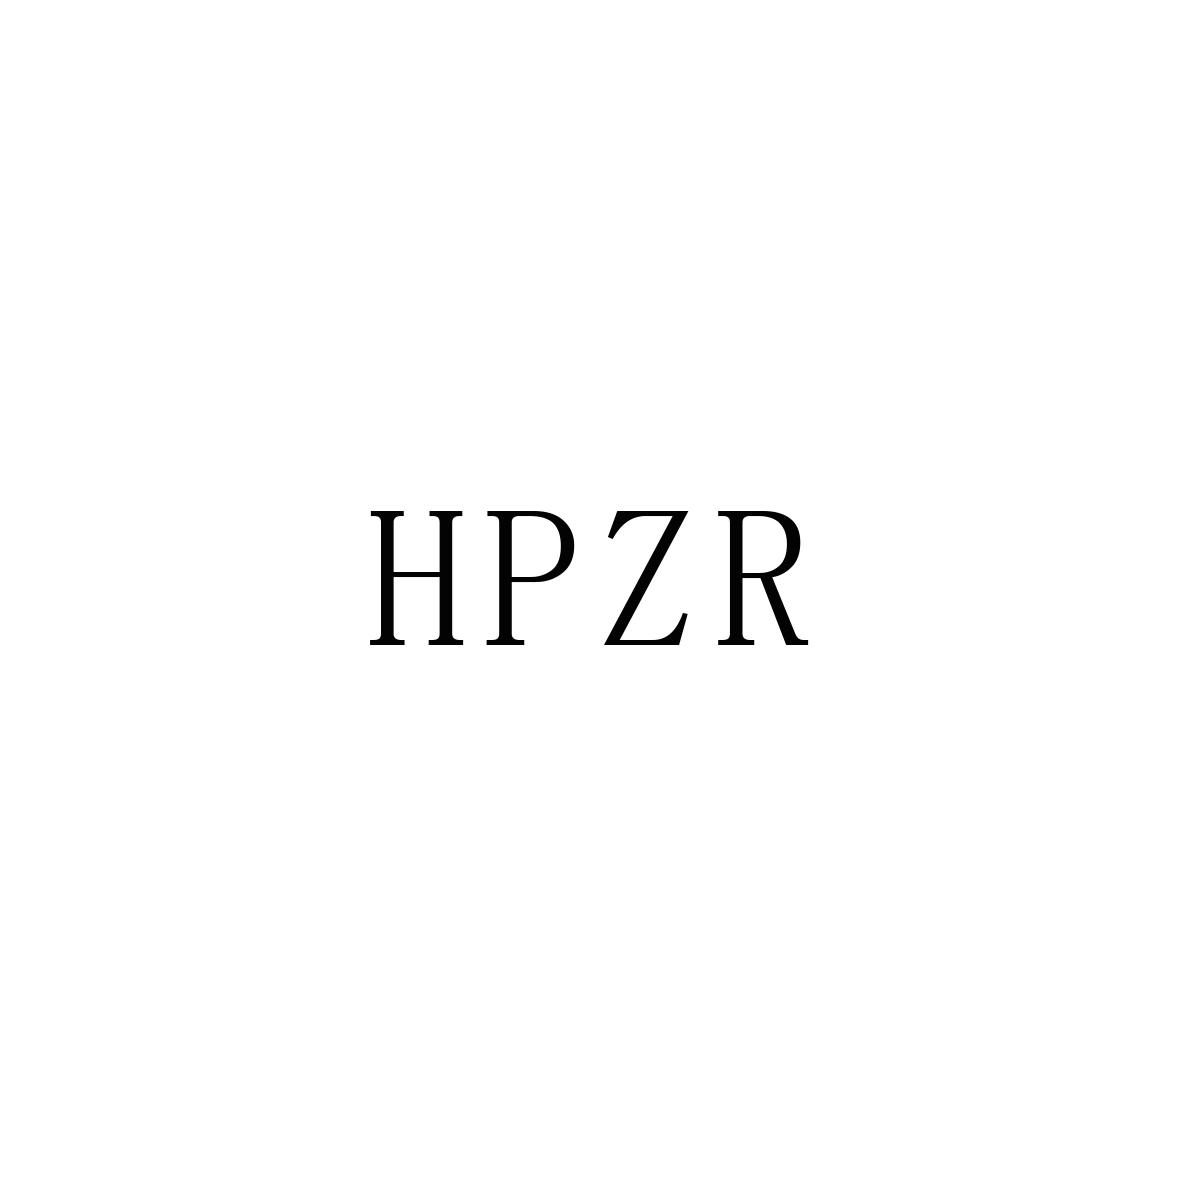 HPZR